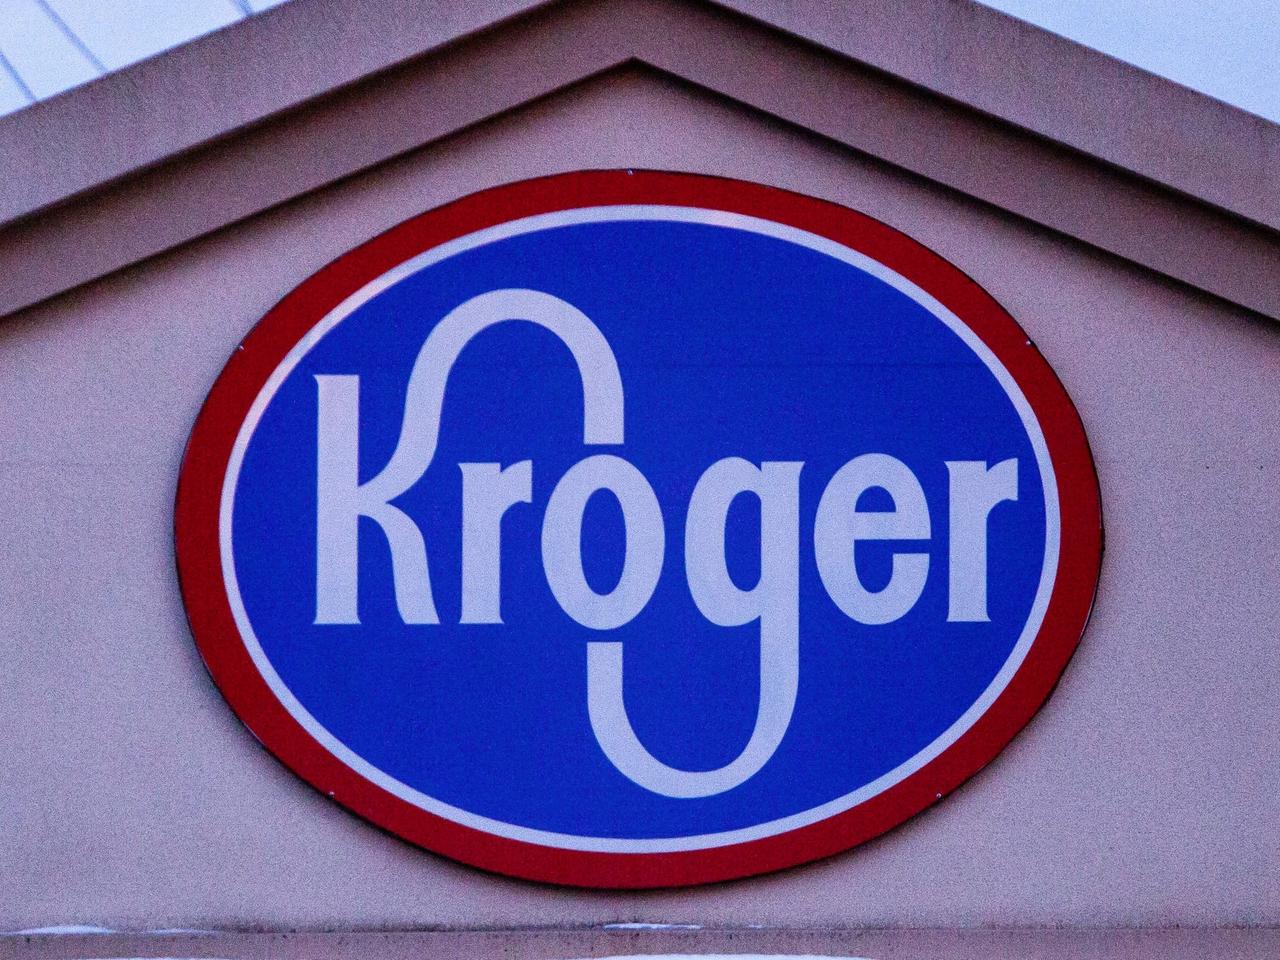  A nonprofit has sued Kroger.